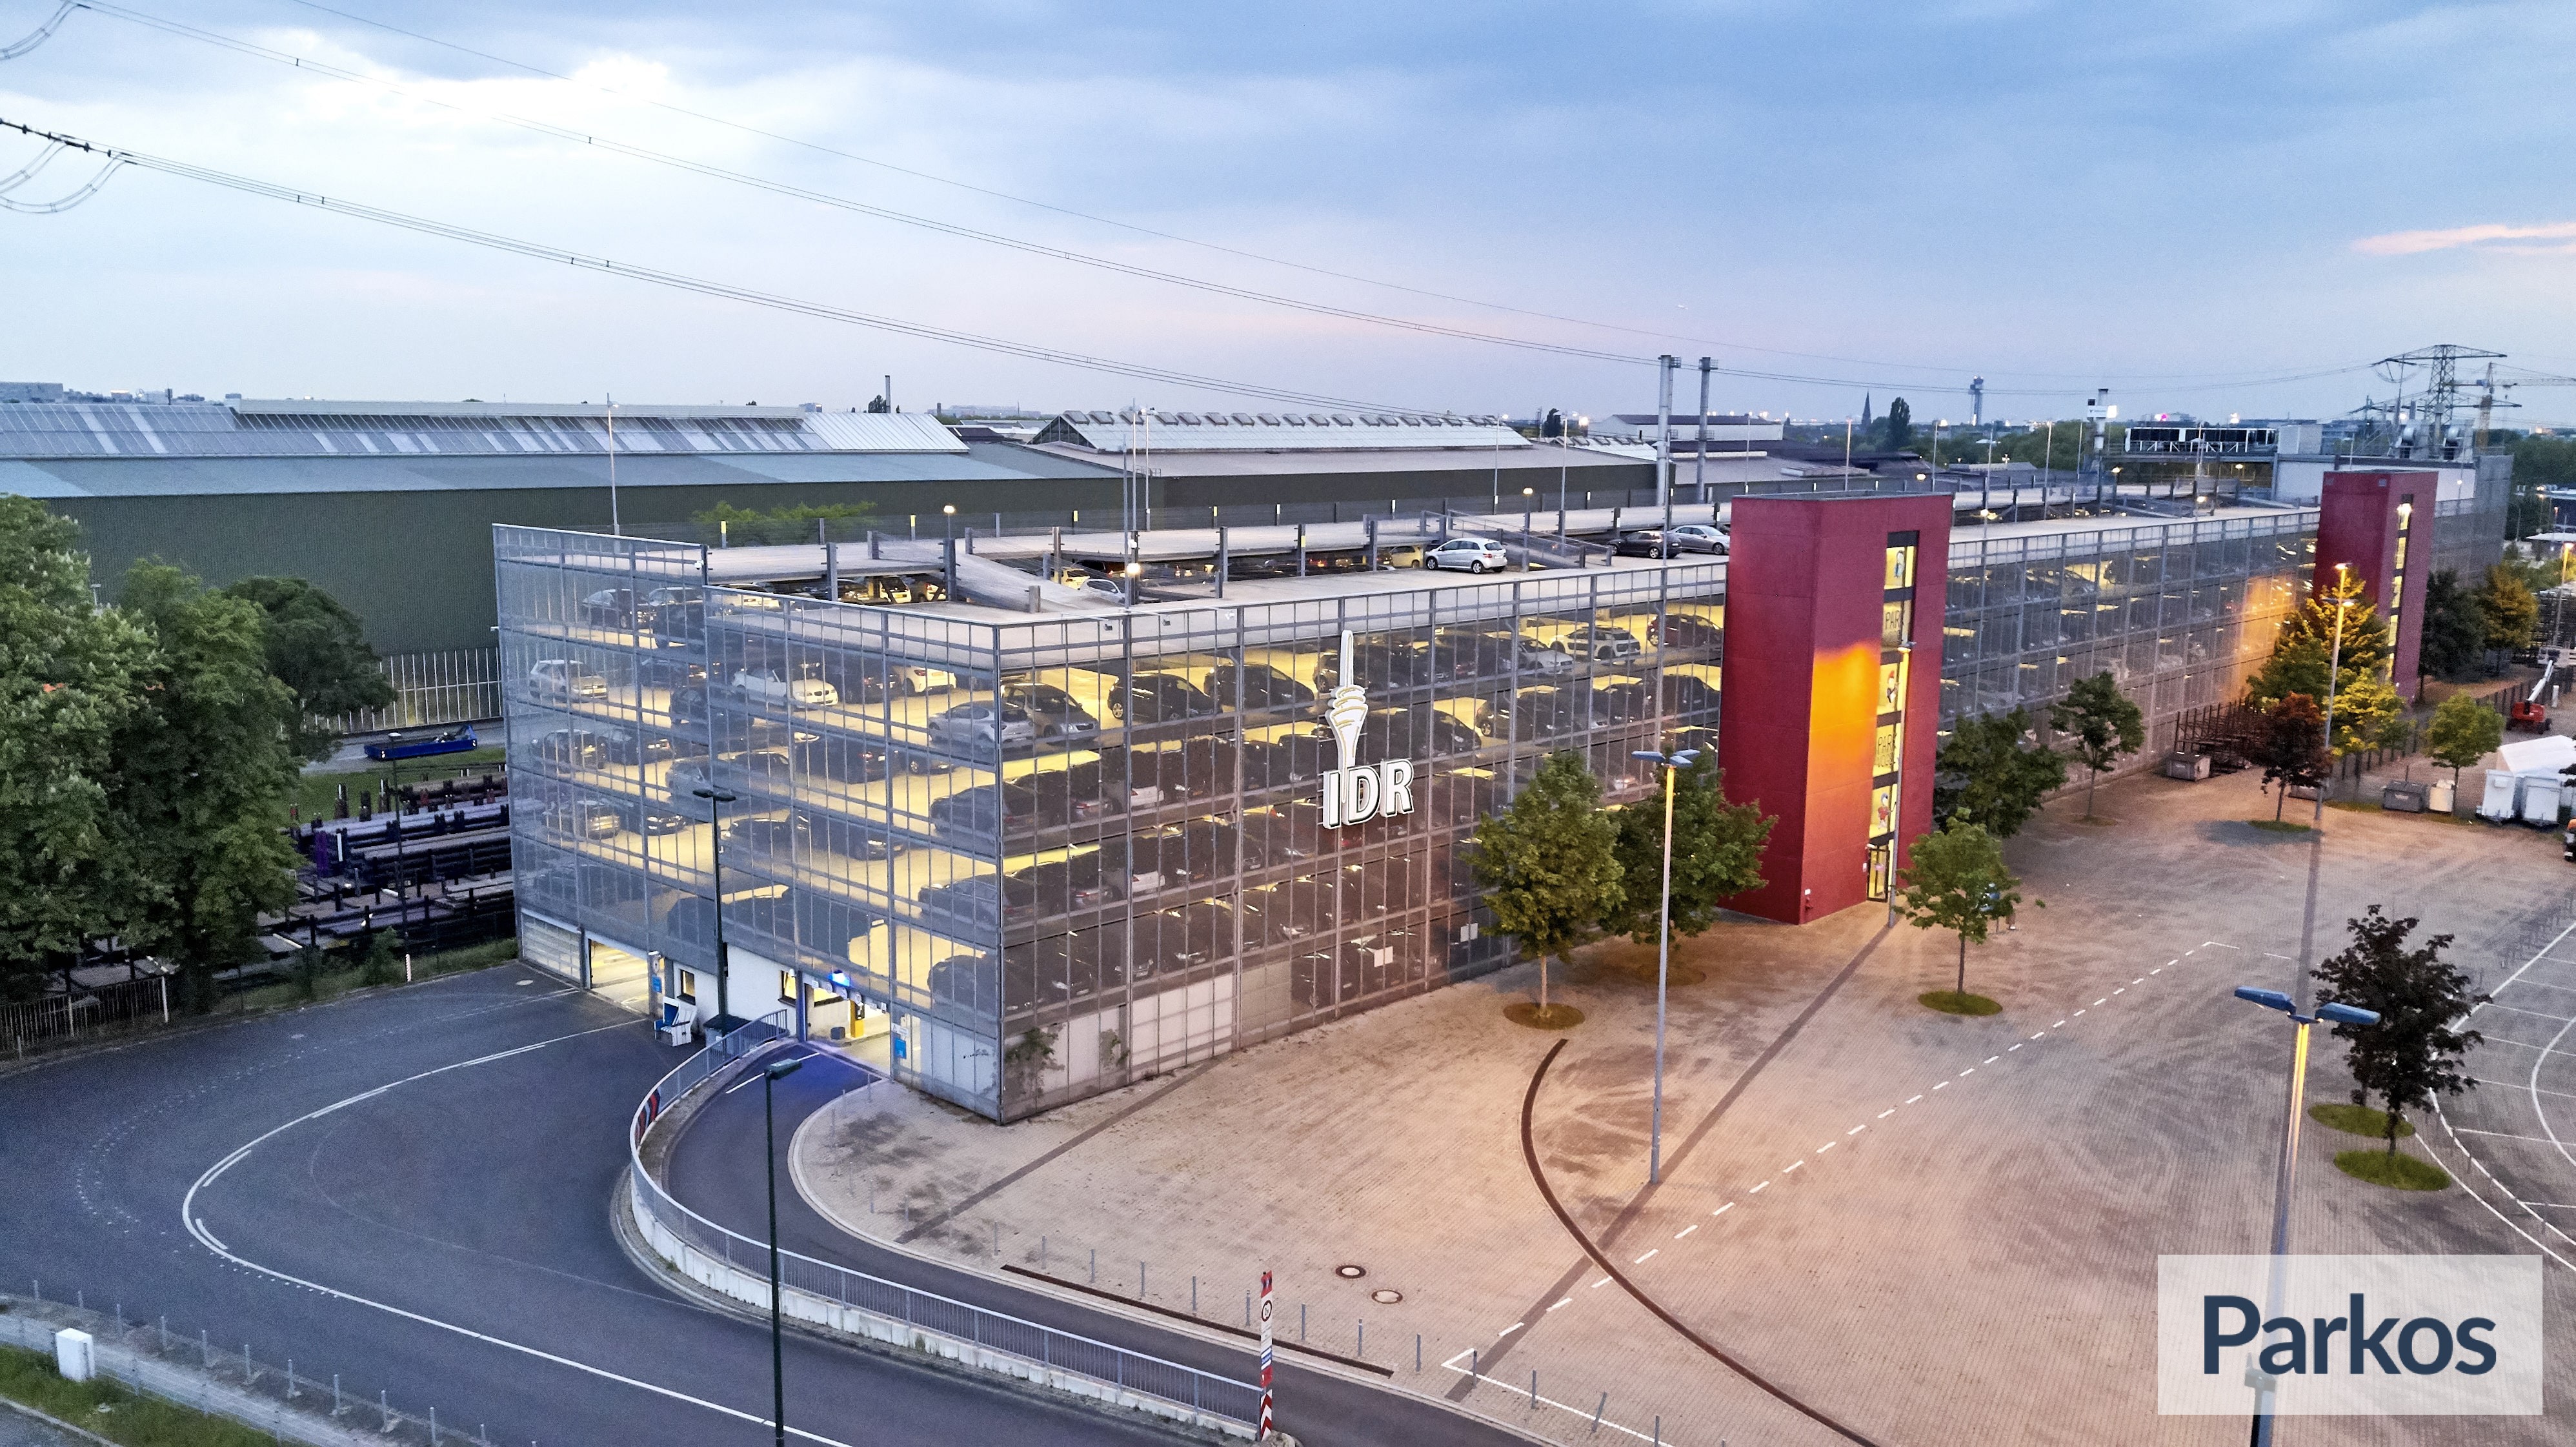 PSD BANK DOME Düsseldorf - Düsseldorf Airport Parking - picture 1